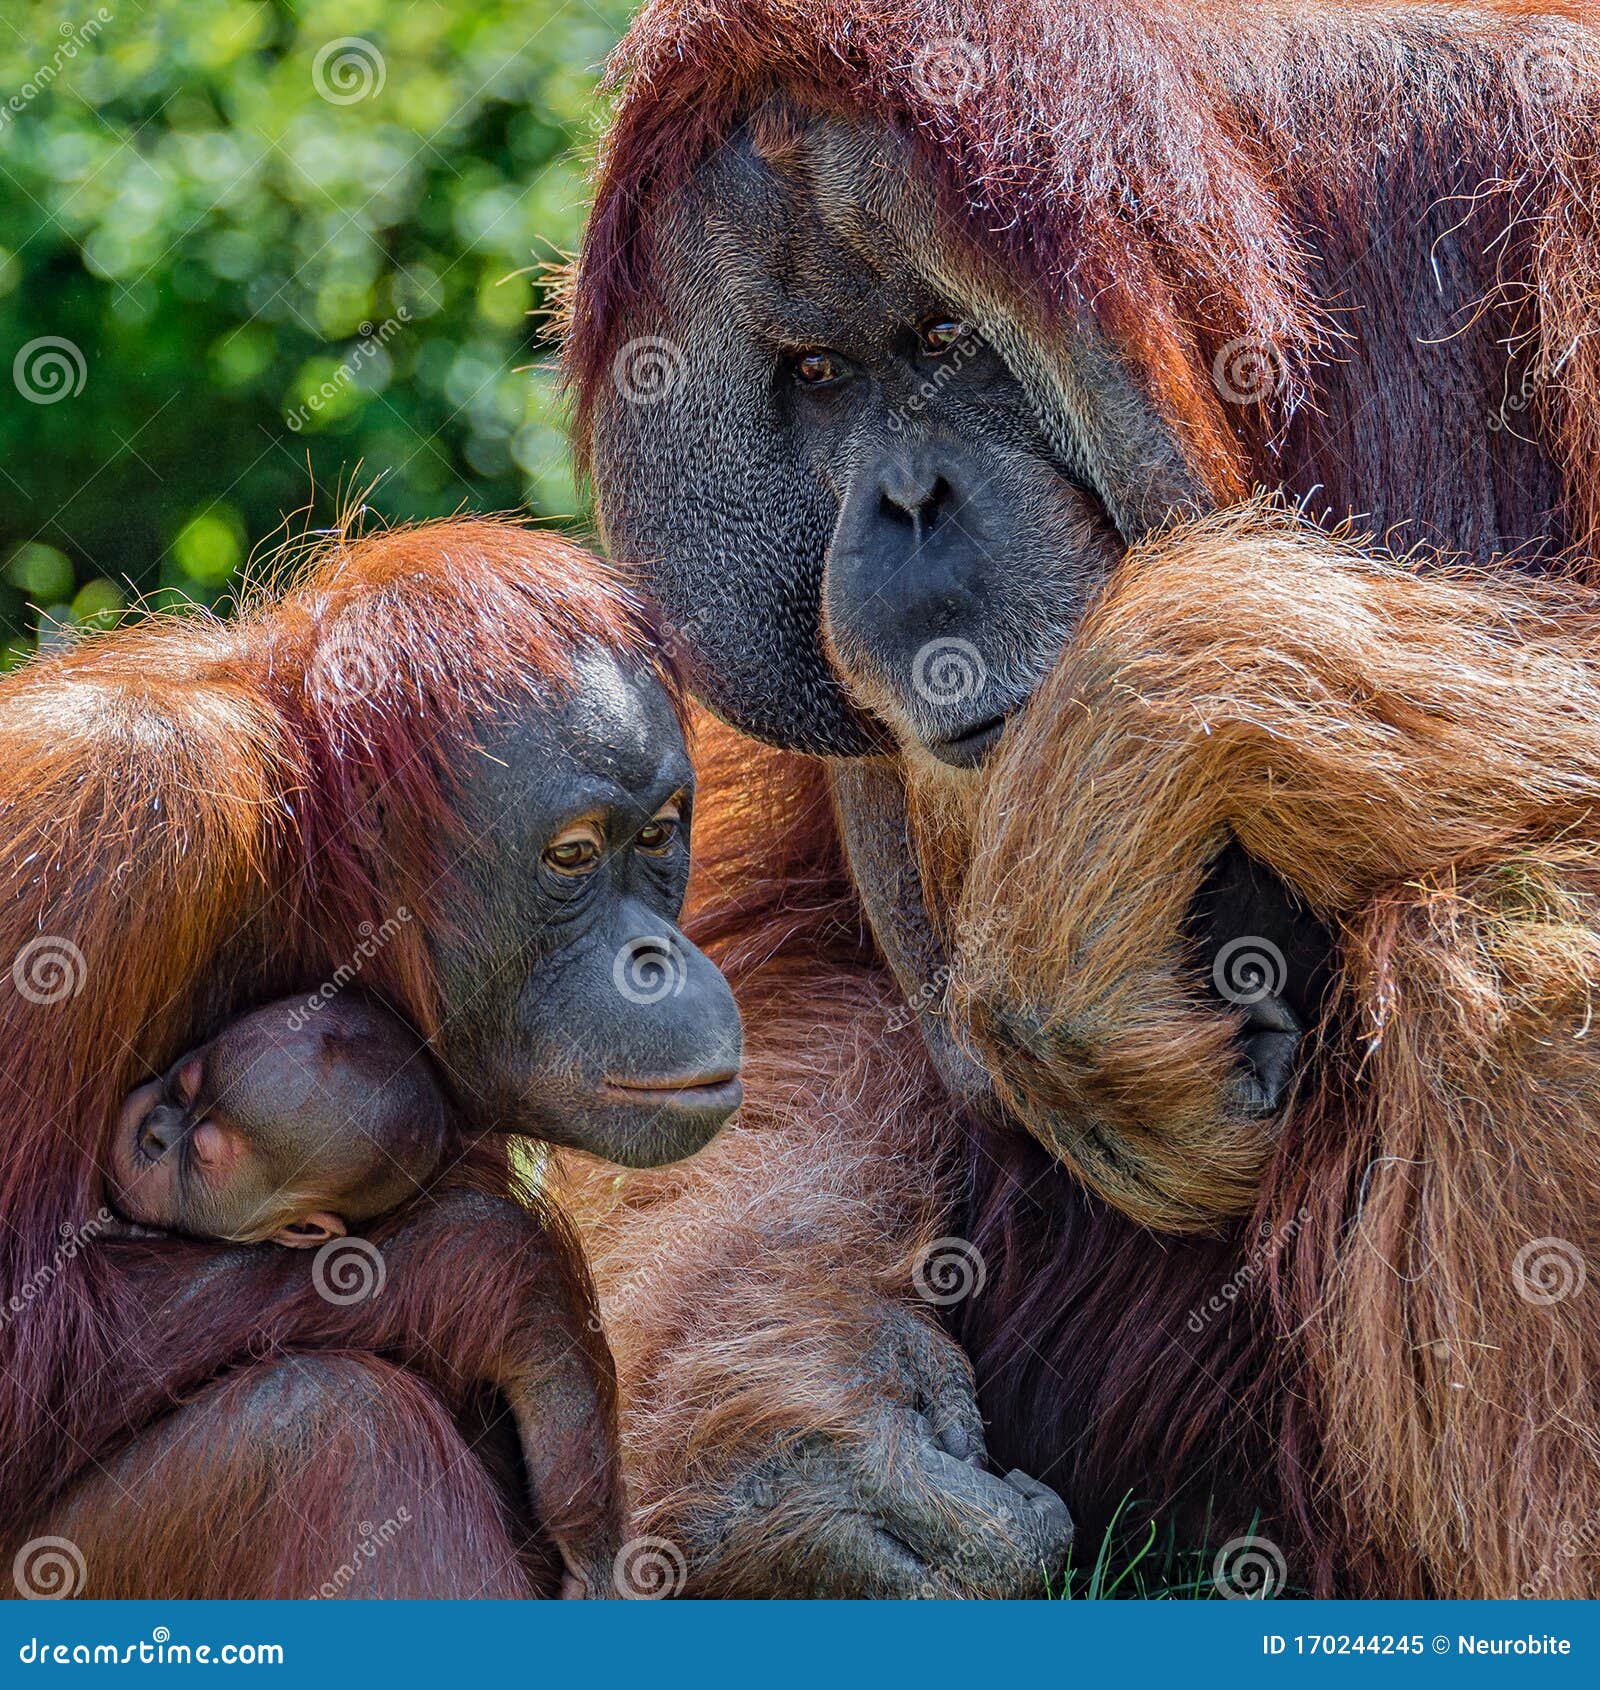 Orangutan Chess Academy